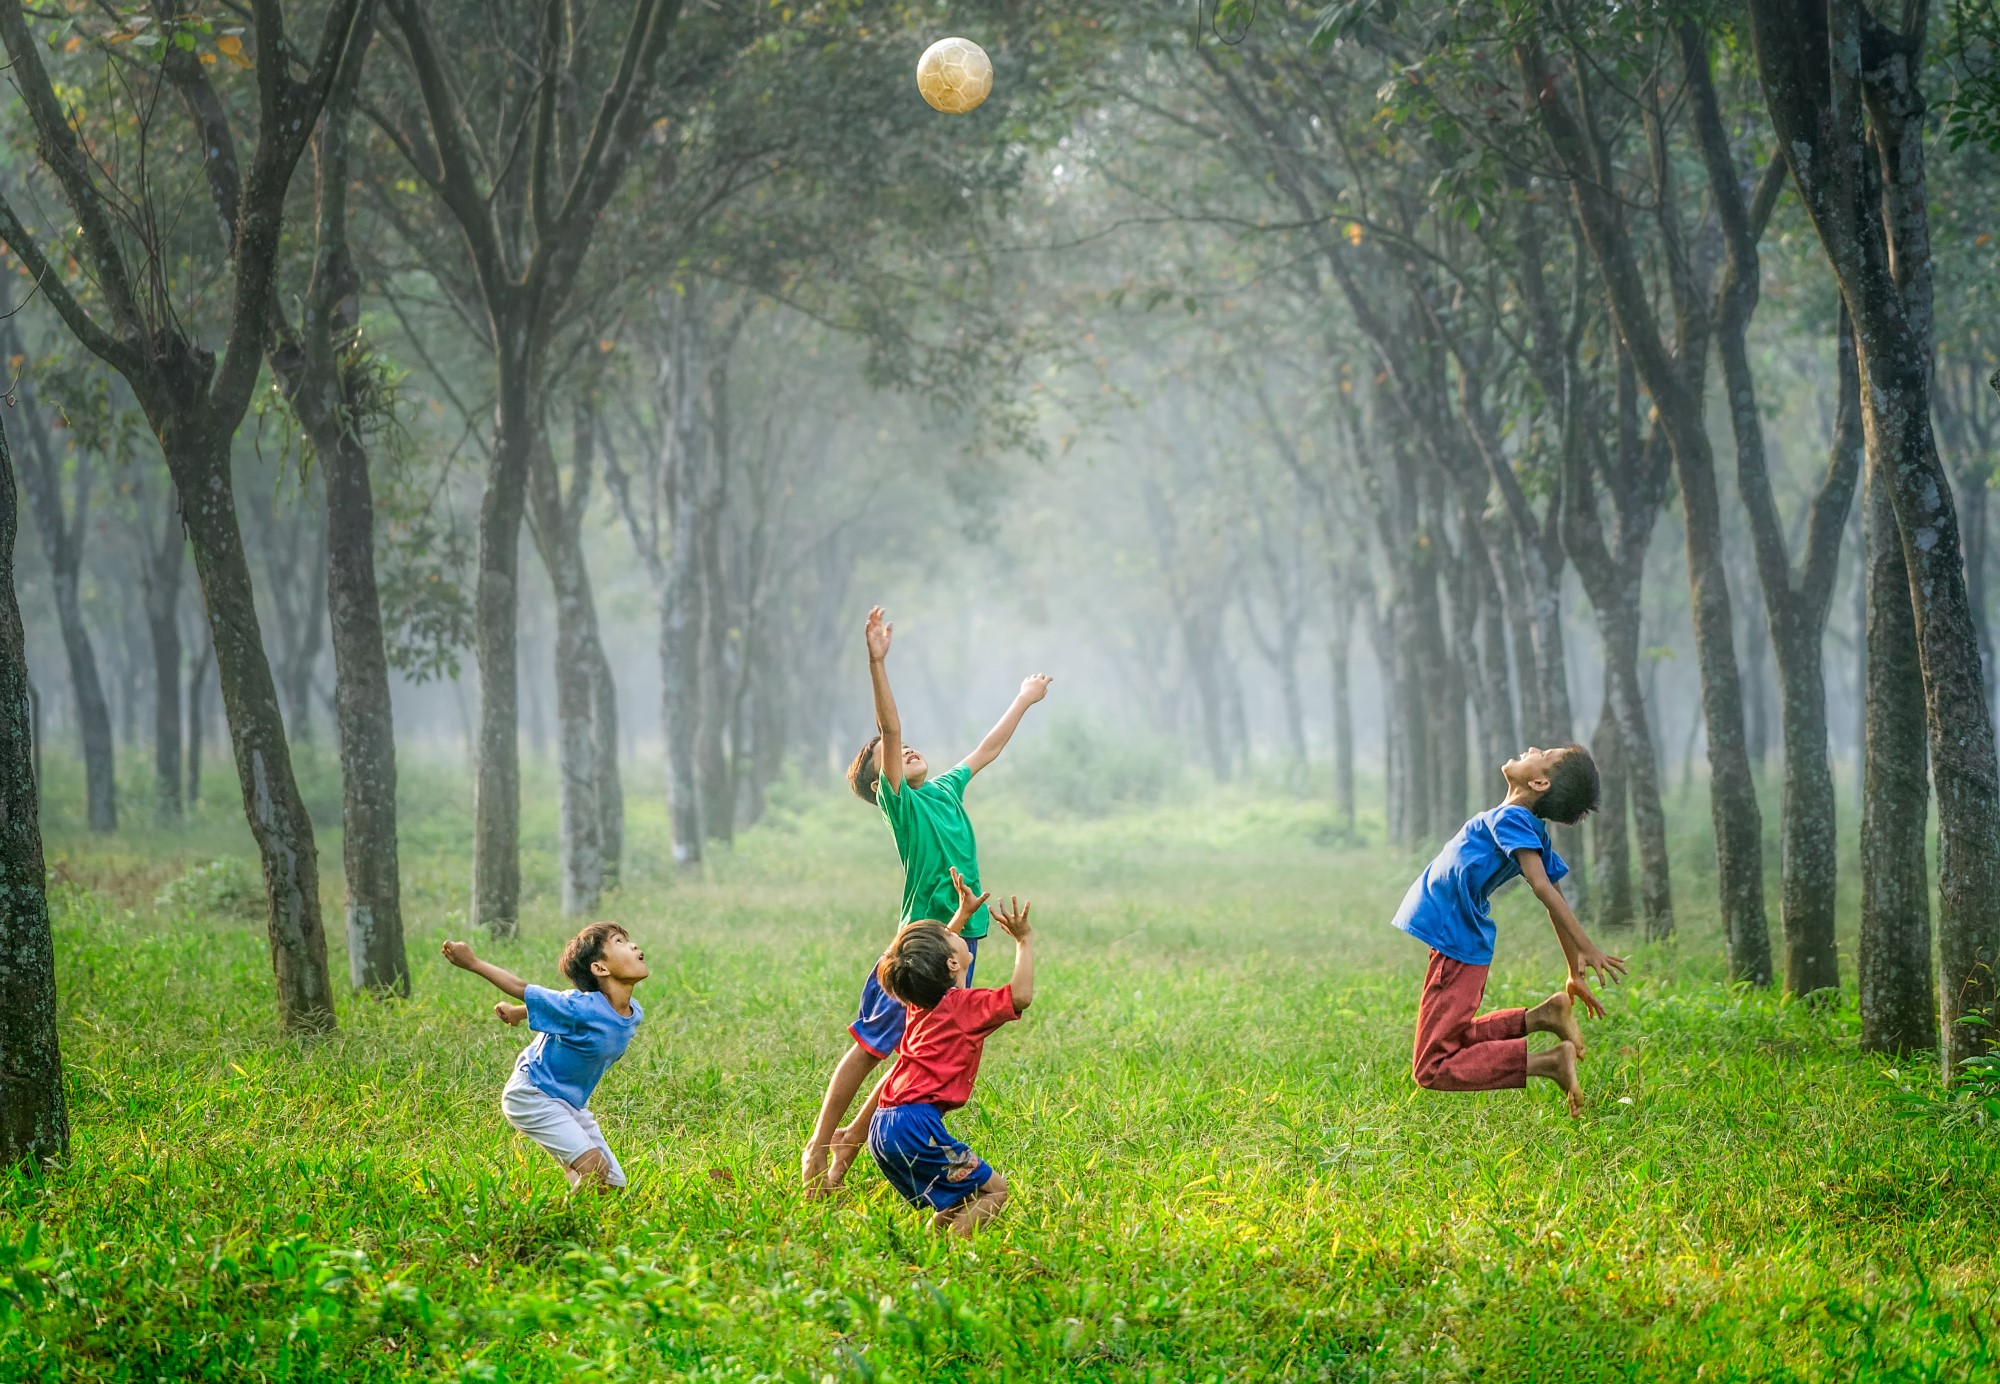 Barn leker med ball